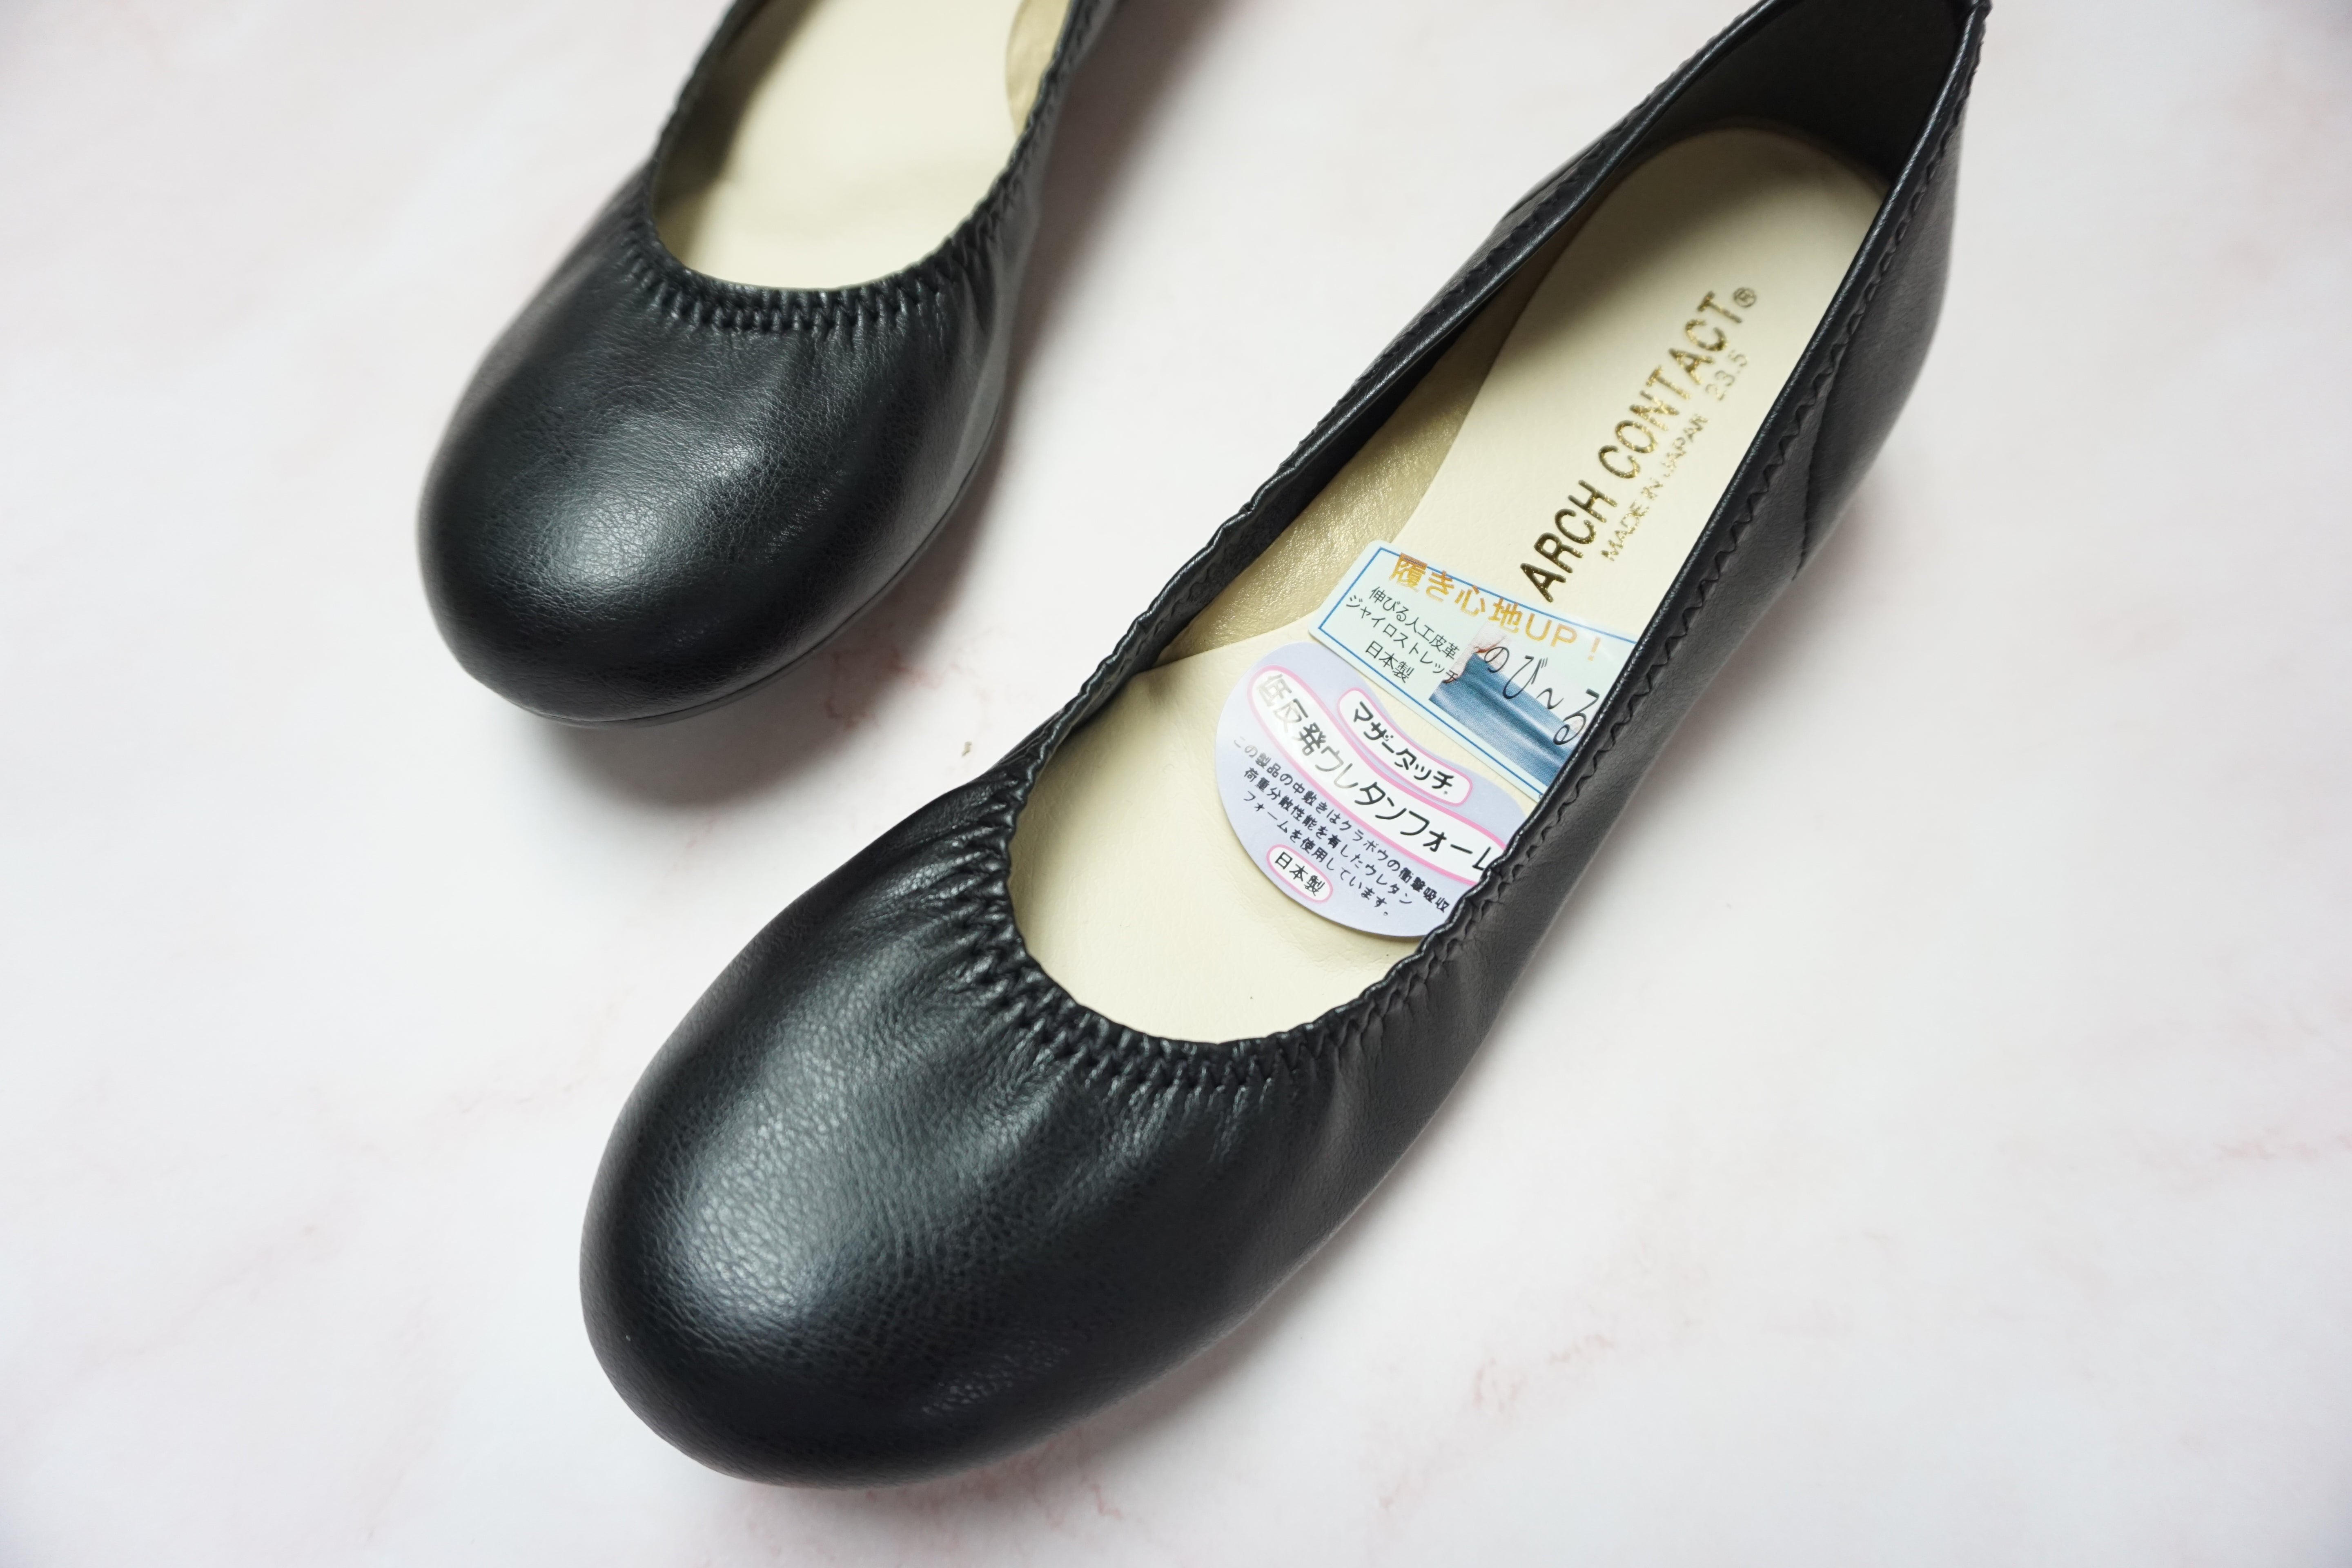 Japan Style Water Proof Flats-ARCH CONTACT-BK-JP/TW Size-1: 230-偉豐鞋 WELL SHOE HK-Well Shoe-偉豐鞋-偉豐網-荃灣鞋店-Functional shoes-Hong Kong Tsuen Wan Shoe Store-Tai Wan Shoe-Japan Shoe-高品質功能鞋-台灣進口鞋-日本進口鞋-High-quality shoes-鞋類配件-荃灣進口鞋-香港鞋店-優質鞋類產品-水靴-帆布鞋-廚師鞋-香港鞋品牌-Hong Kong Shoes brand-長者鞋-Hong Kong Rain Boots-Kitchen shoes-Cruthes-Slipper-Well Shoe Hong Kong-Anello-Arriba-休閒鞋-舒適鞋-健康鞋-皮鞋-Healthy shoes-Leather shoes-Hiking shoes